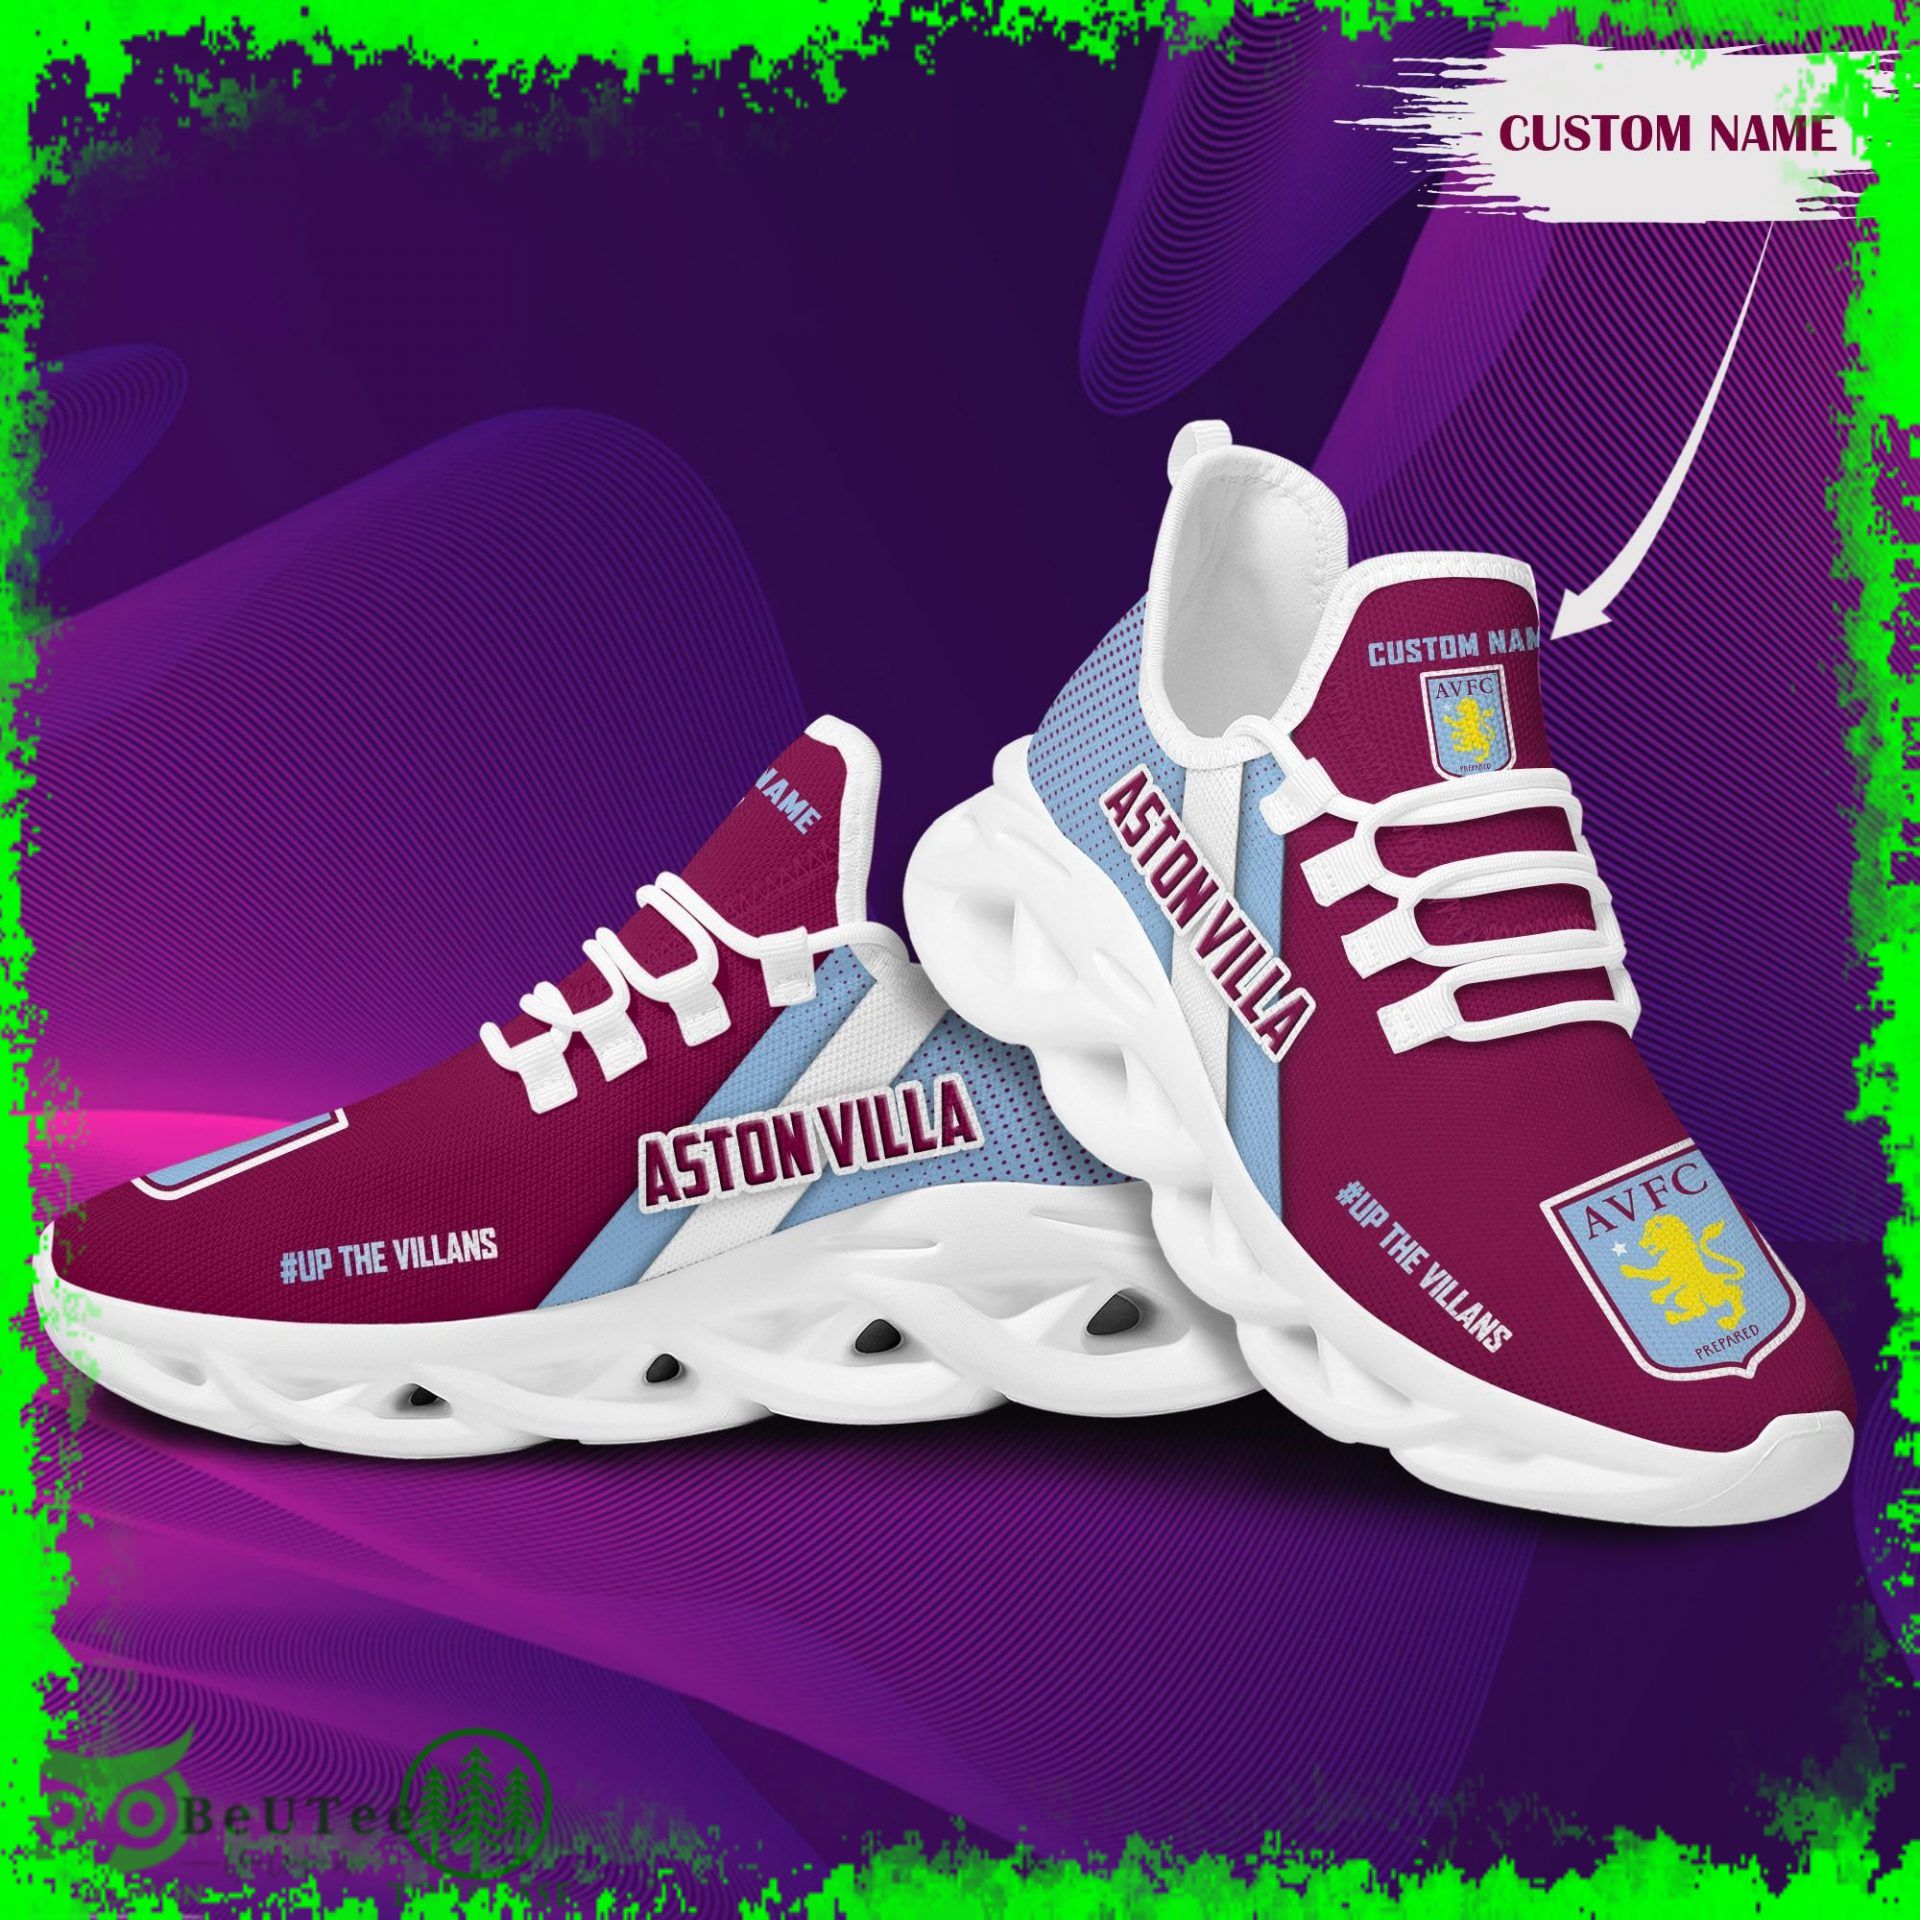 5 Aston Villa FC Claret up the Villans Custom Name Max Soul Shoes